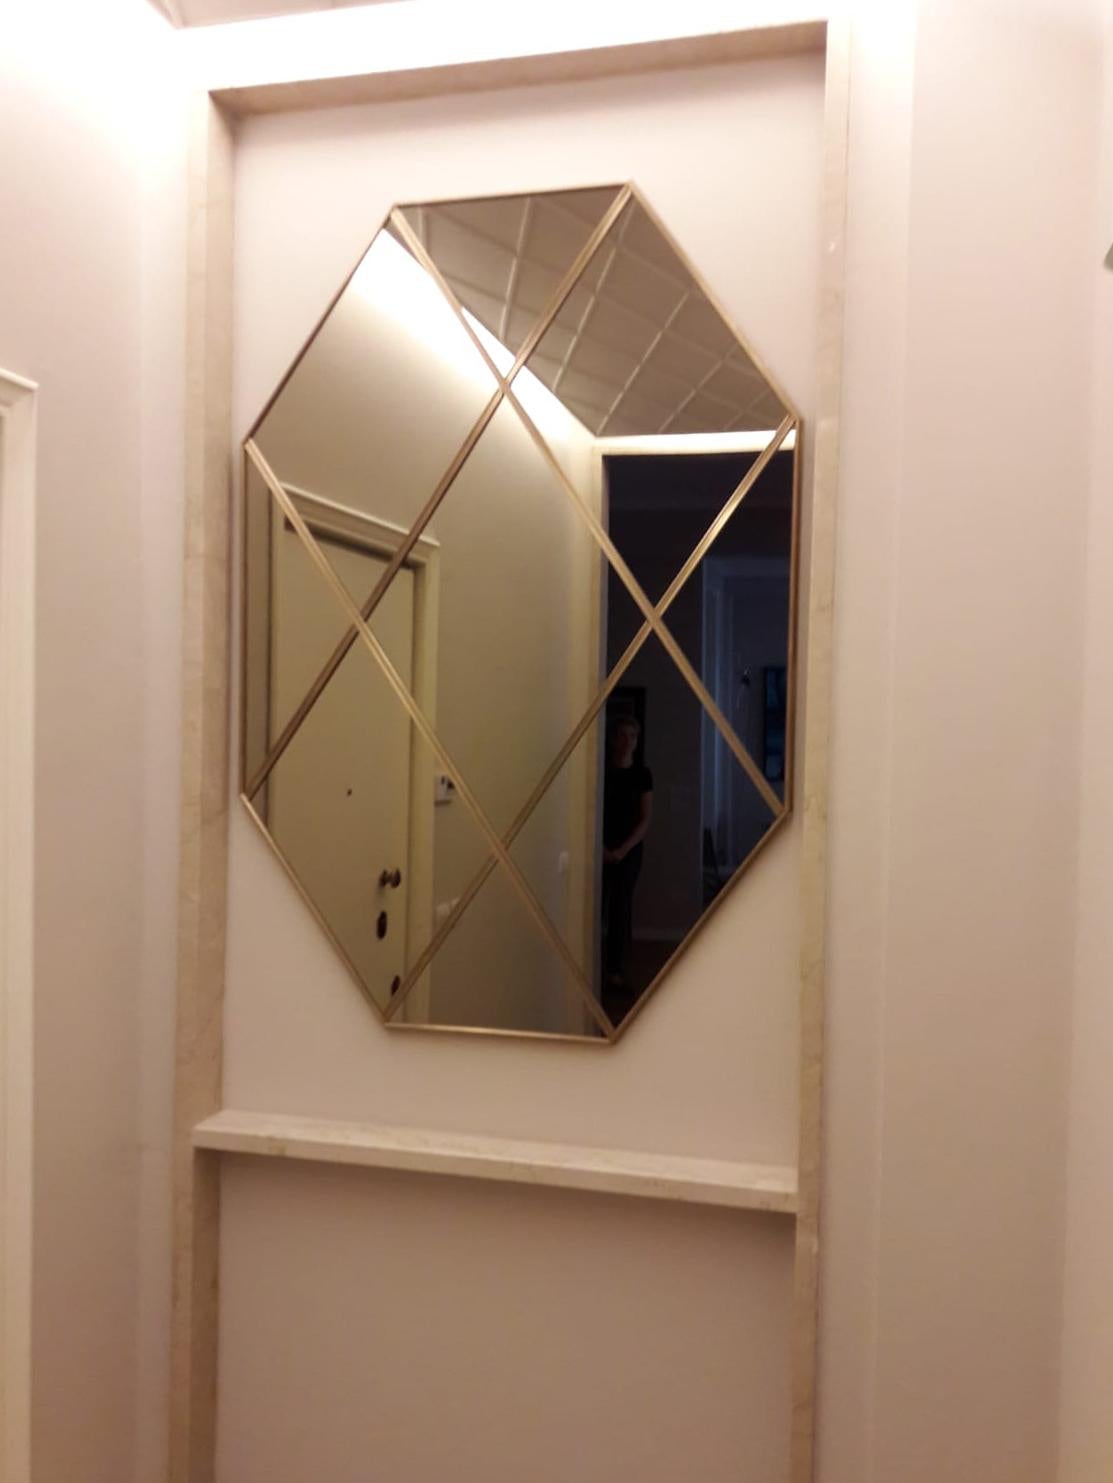 Art Deco Style Customizable Octagonal Brass Window Look Bronze Mirror 63